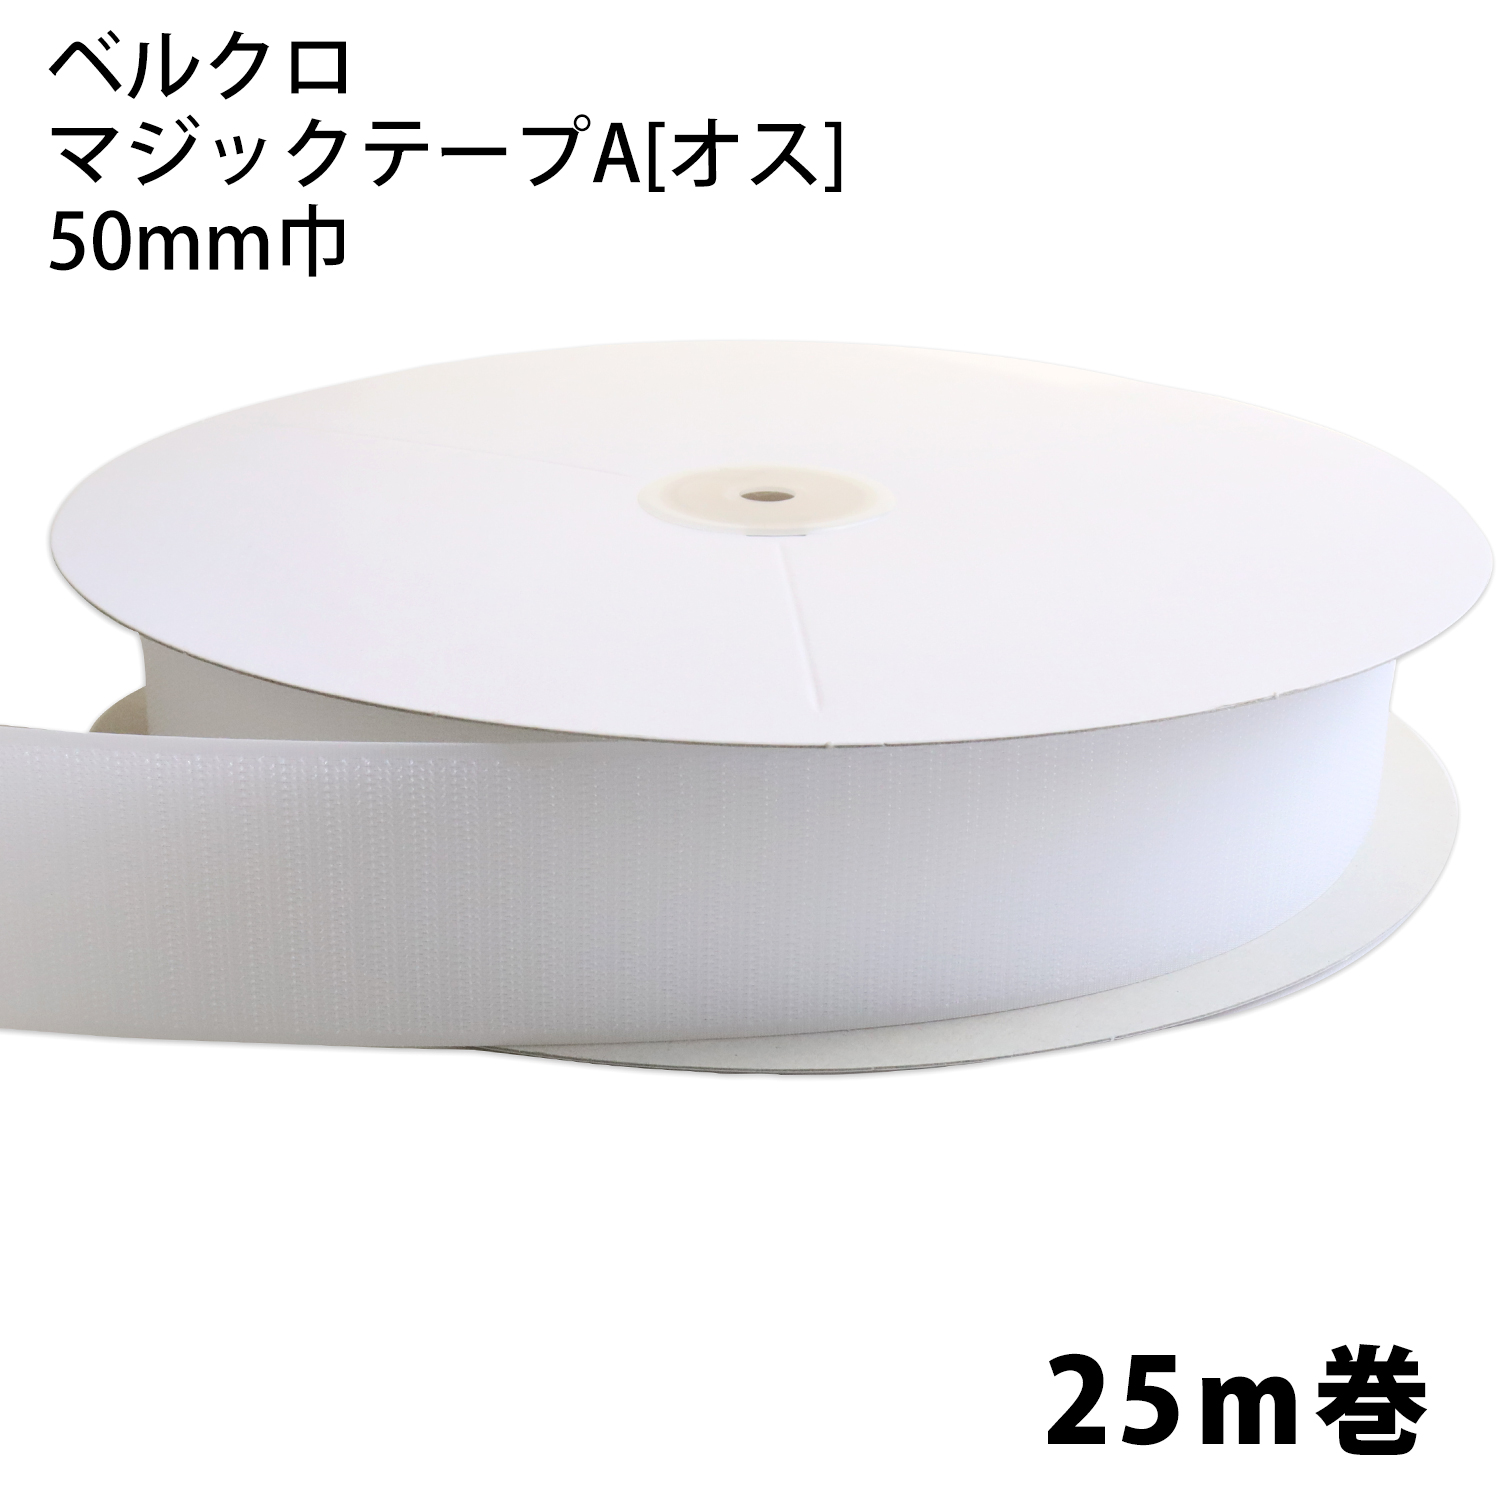 F11-BER50-25A-1 Velcro Tape A [hooks]  50mm Width x 25m White (roll)